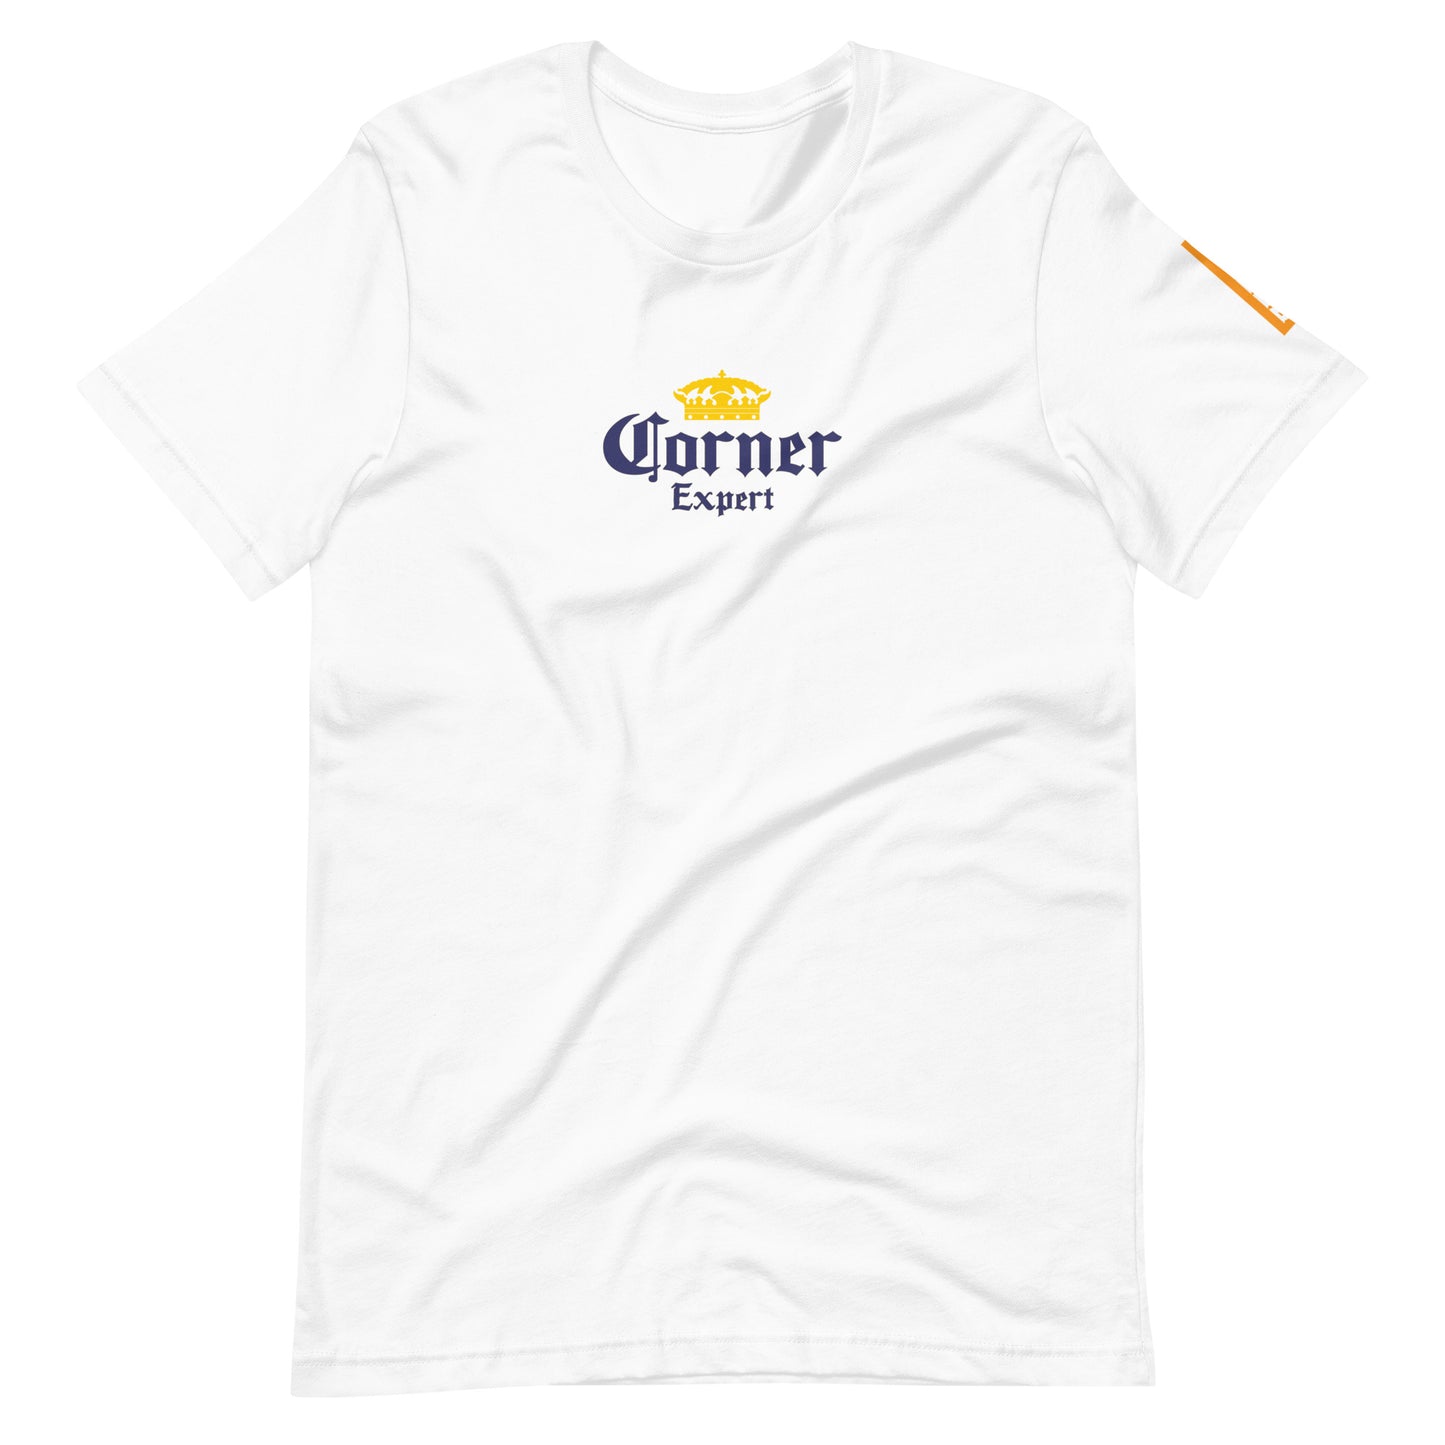 Corner expert t-shirt